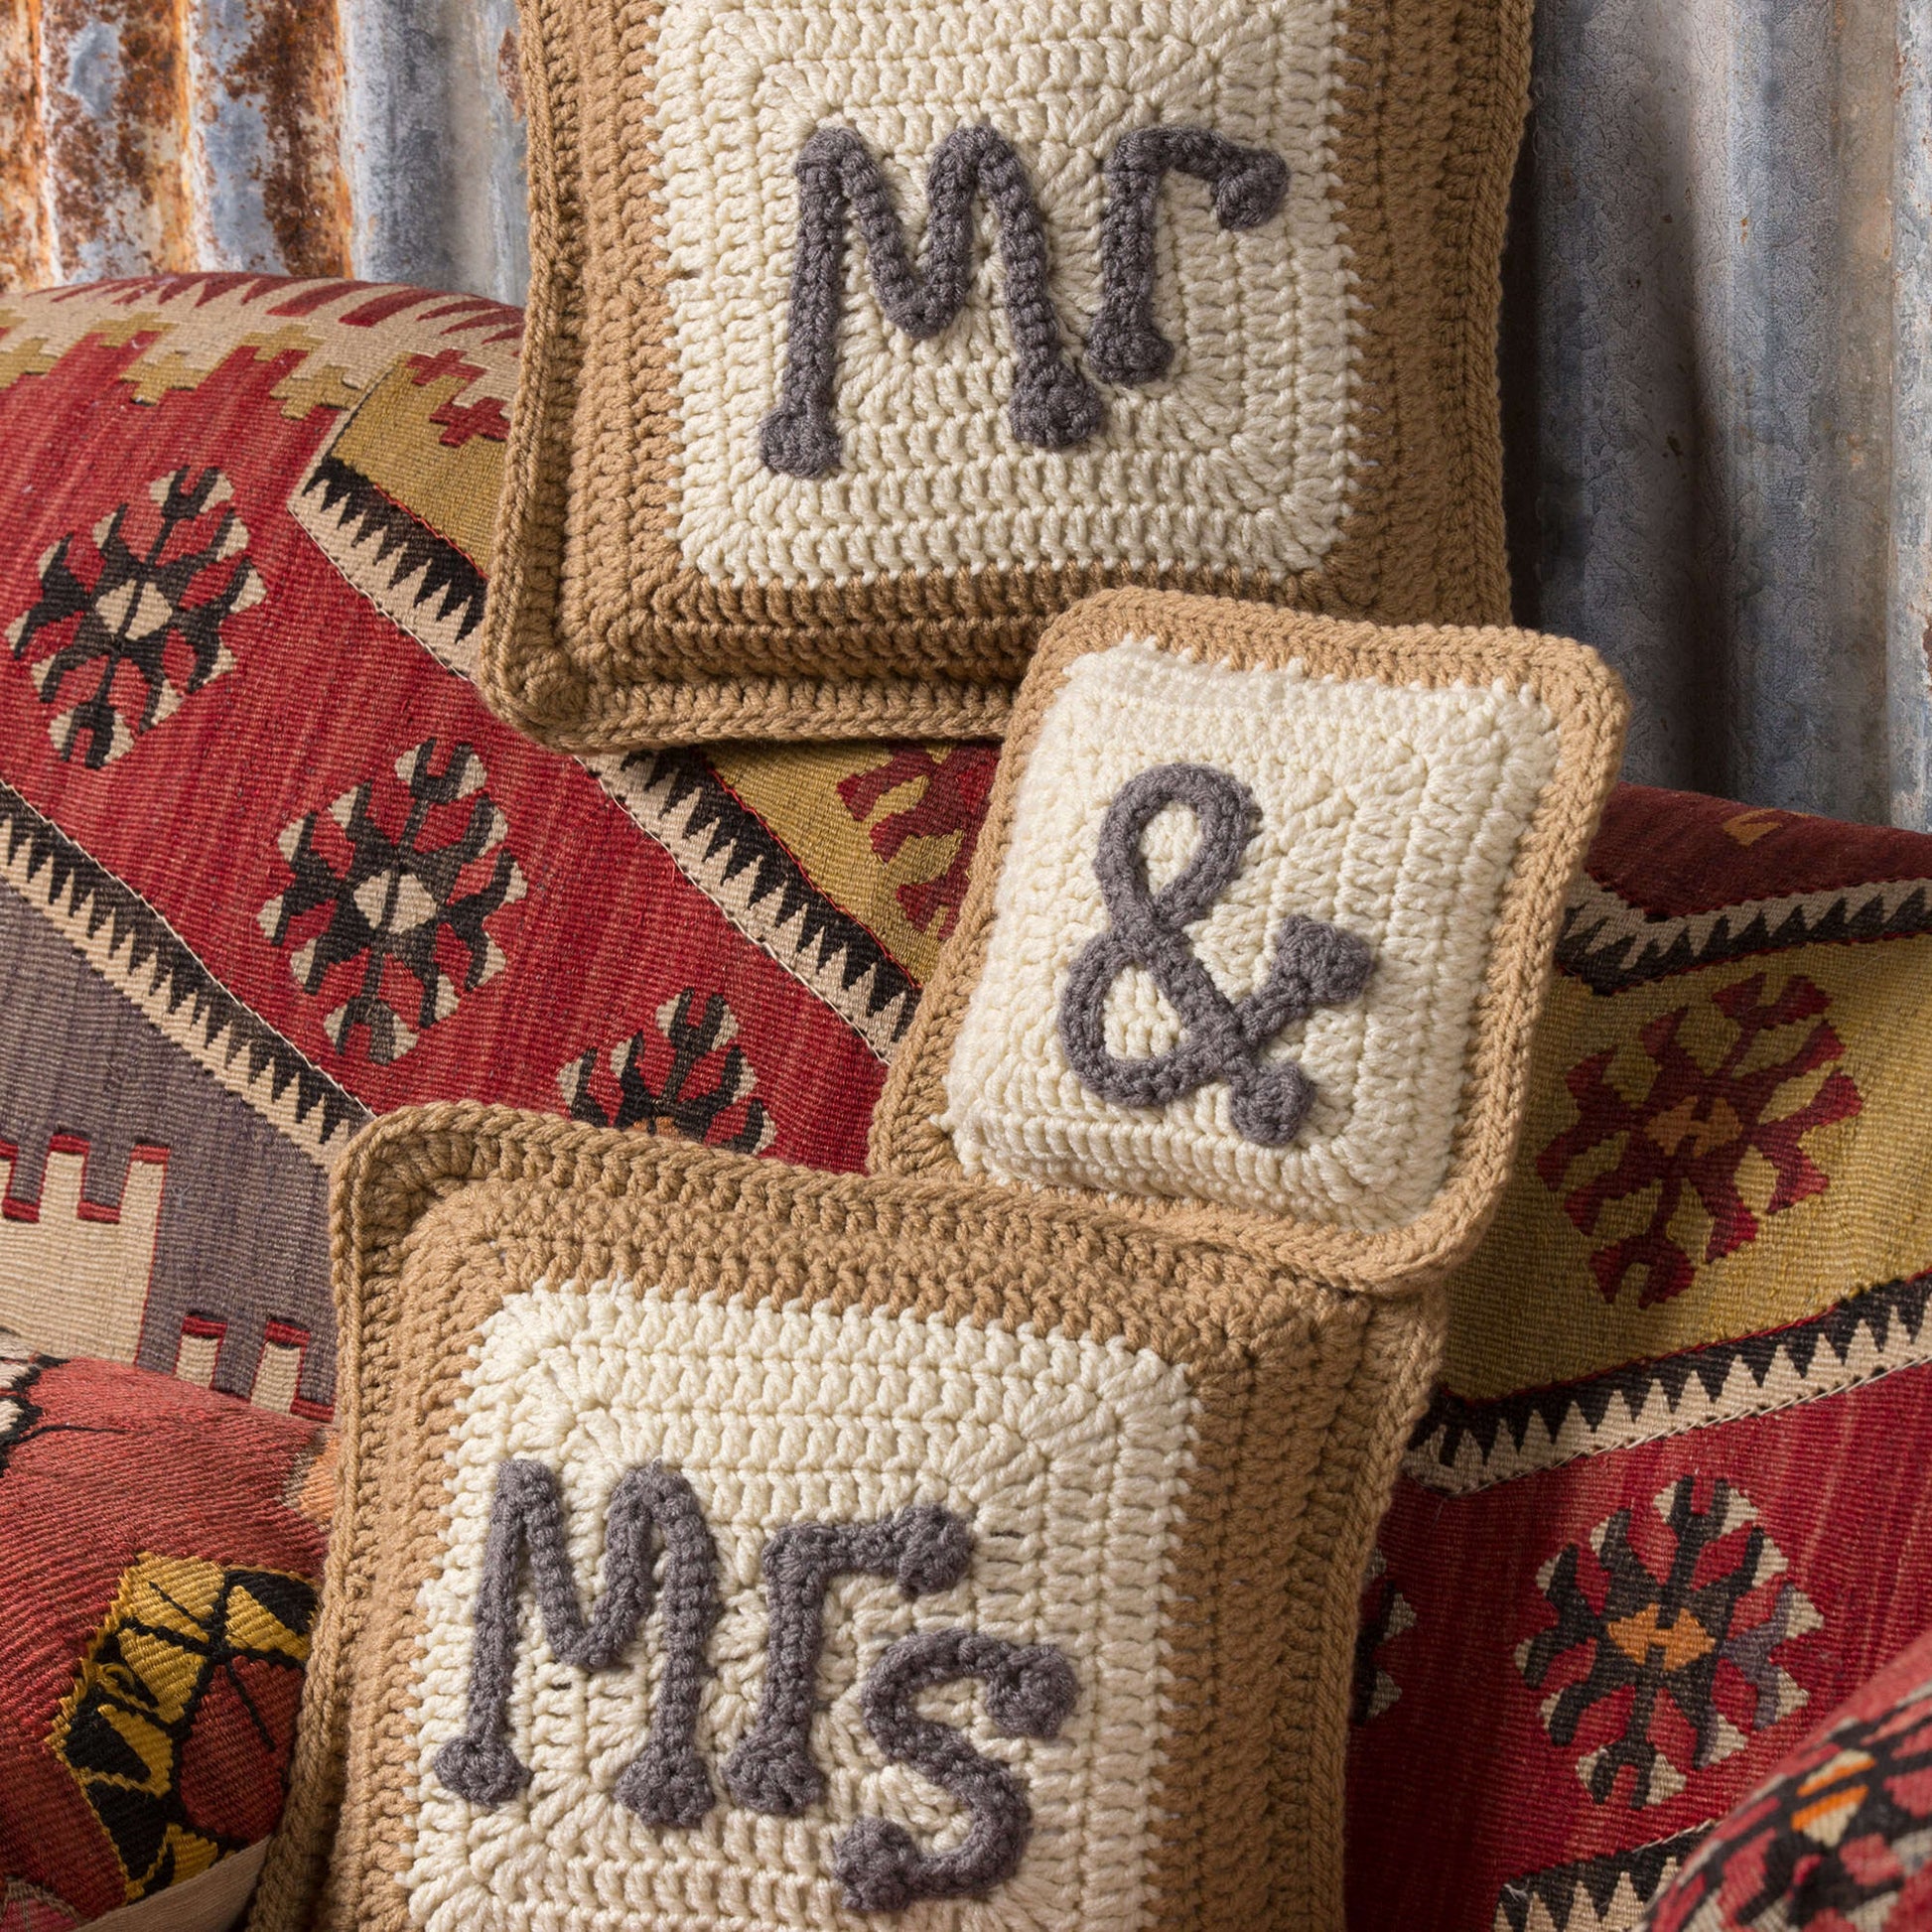 Free Red Heart Mr. & Mrs. Pillows Crochet Pattern